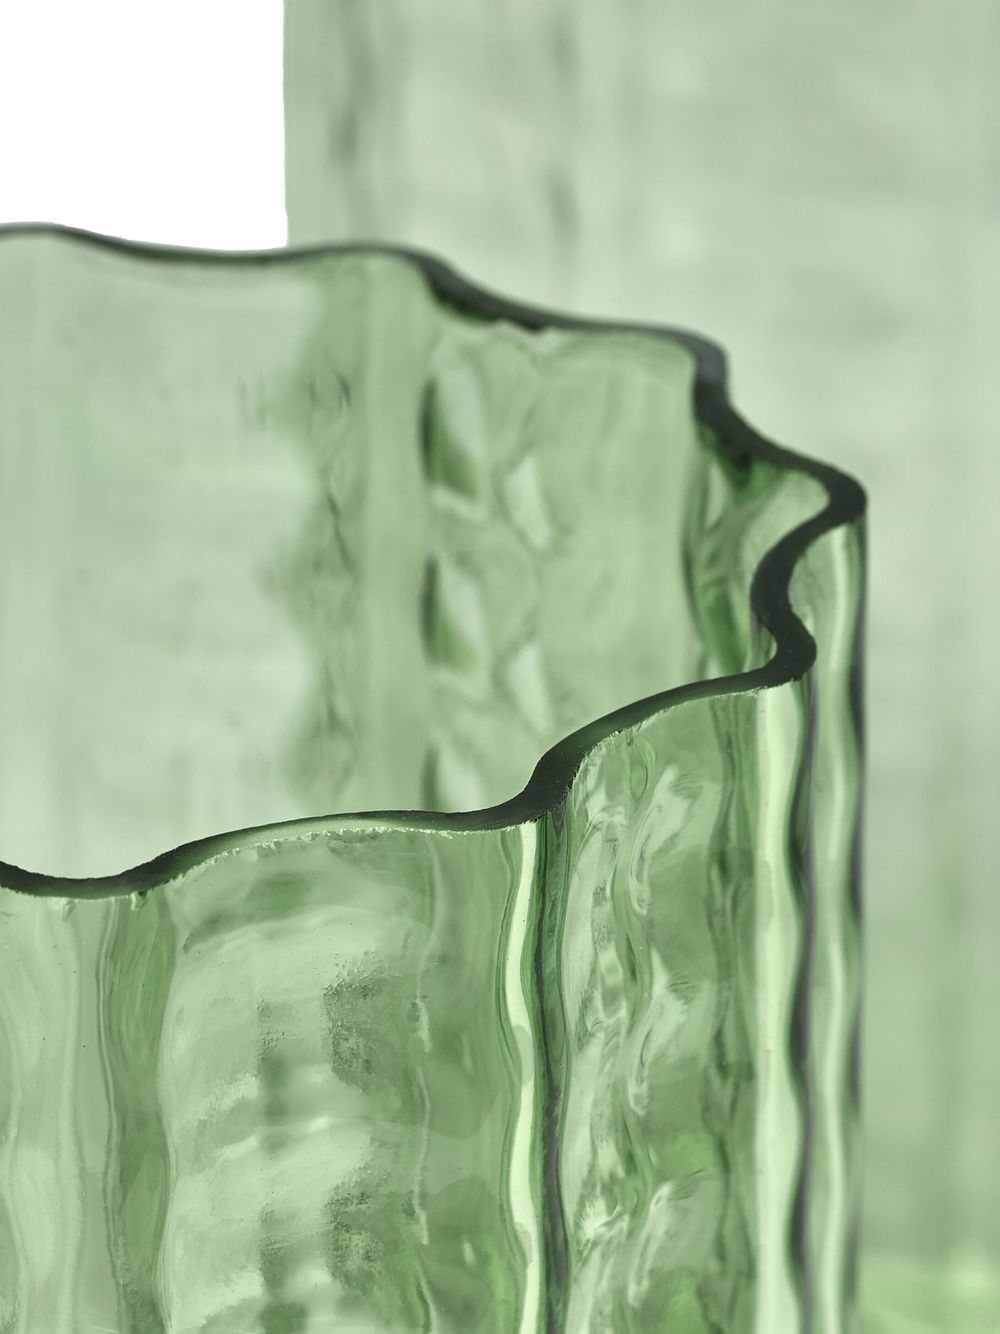 Image 2 of Serax Wave 02 vase